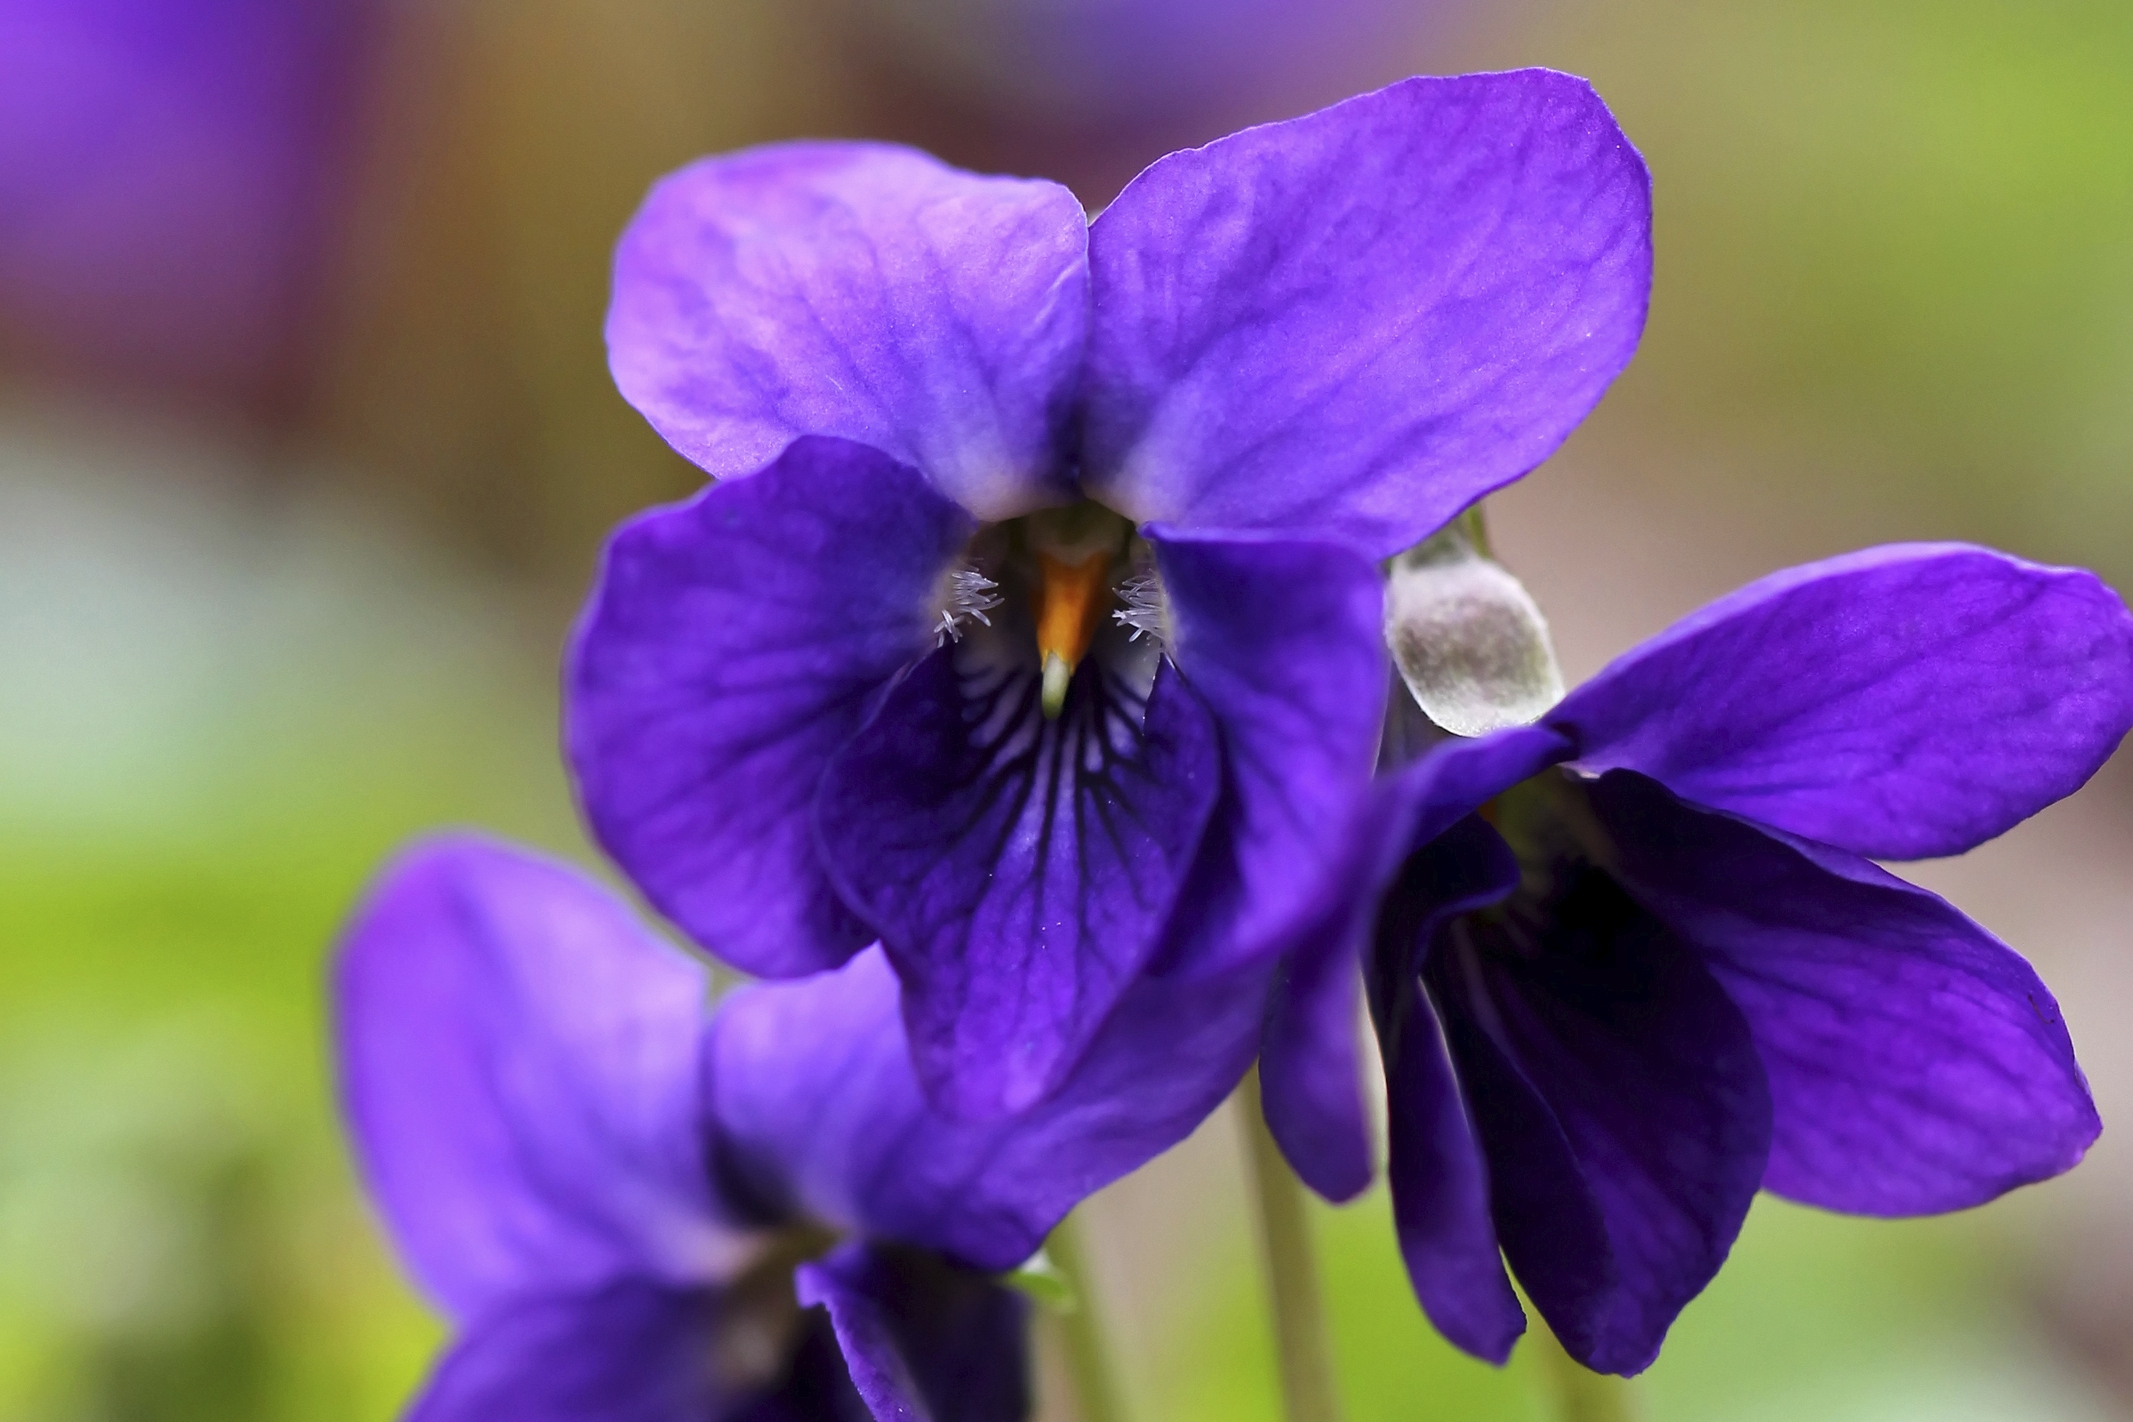 Violette odorante (Viola odorata) : propriétés, bienfaits de cette plante  en phytothérapie - Doctissimo